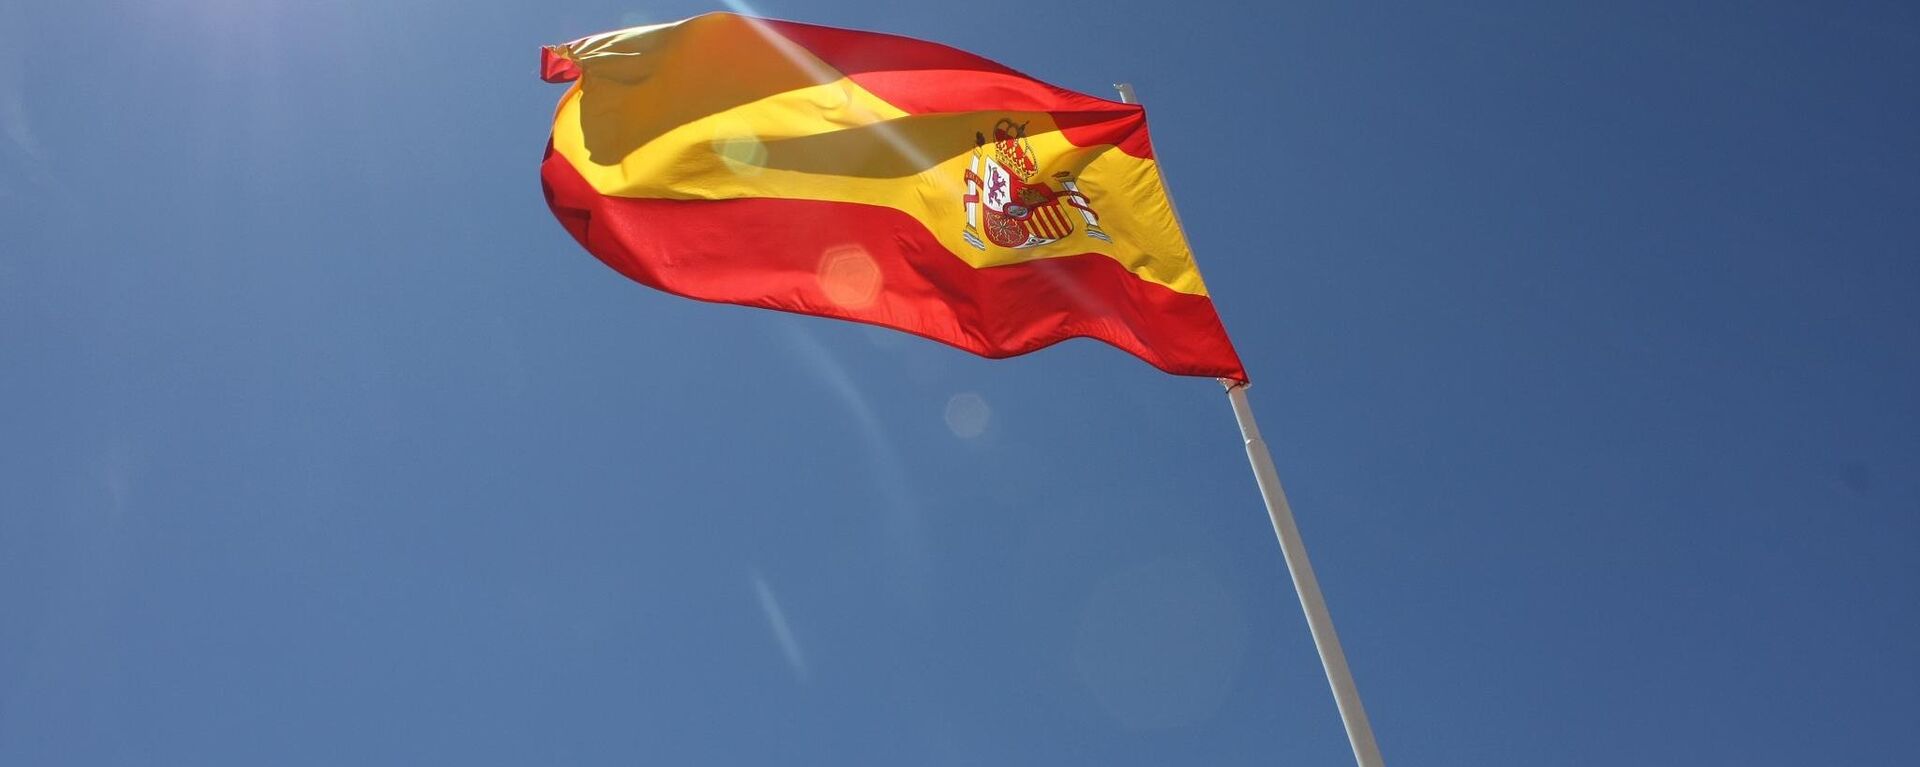 Bandera de España - Sputnik Mundo, 1920, 10.06.2021